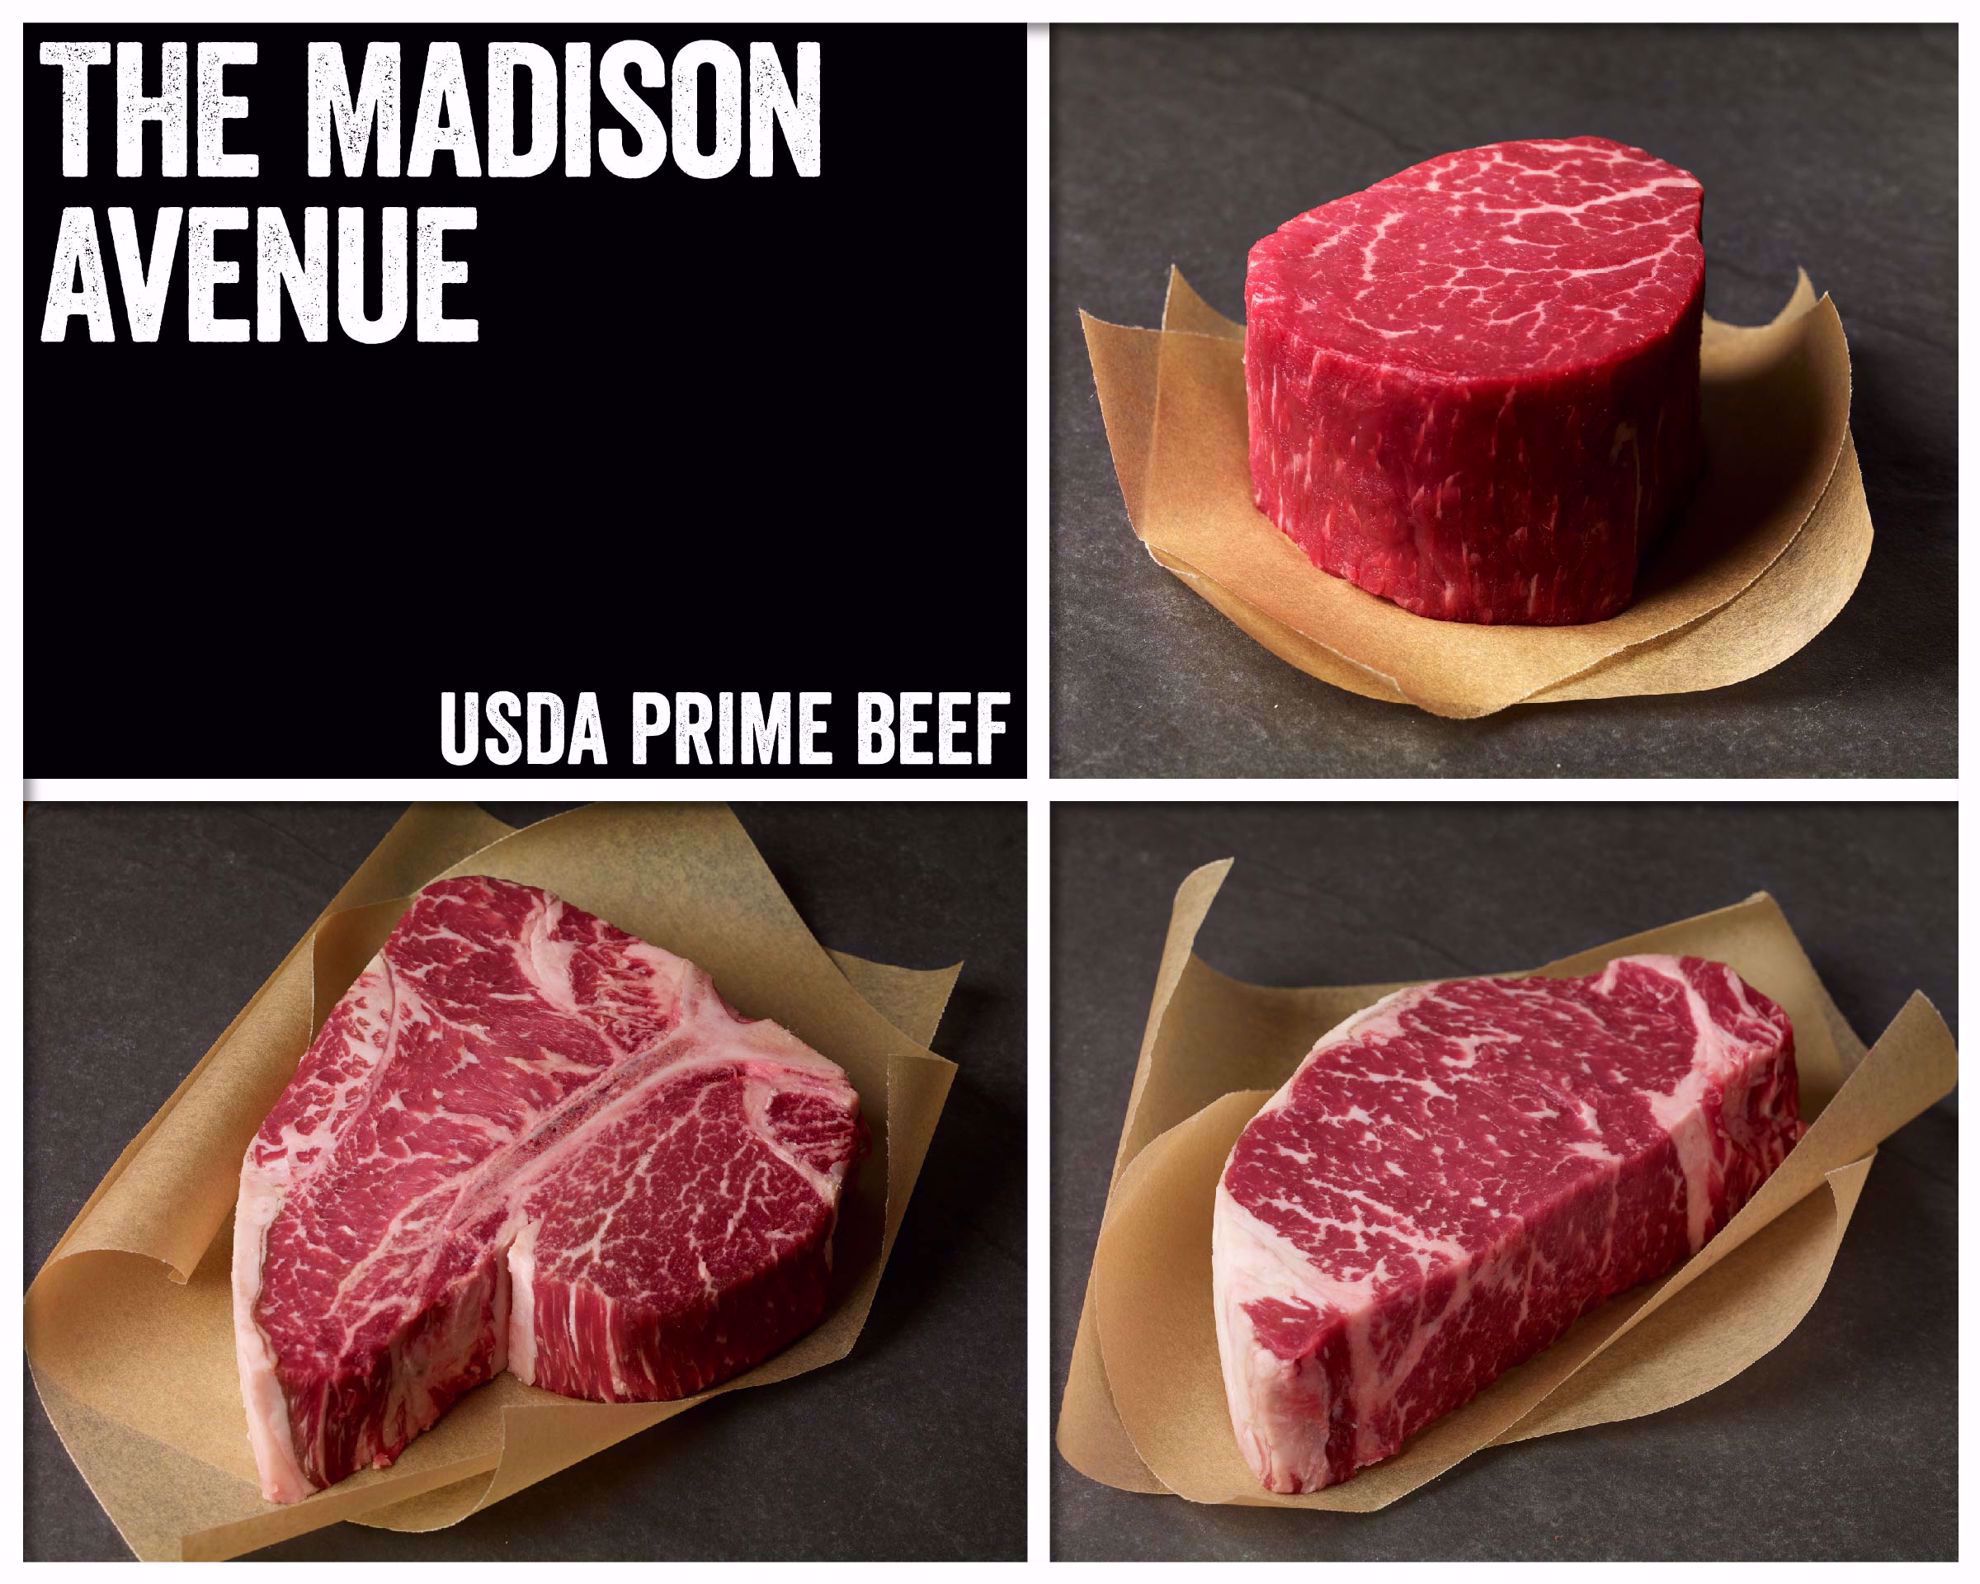 The Madison Avenue - USDA Prime Beef